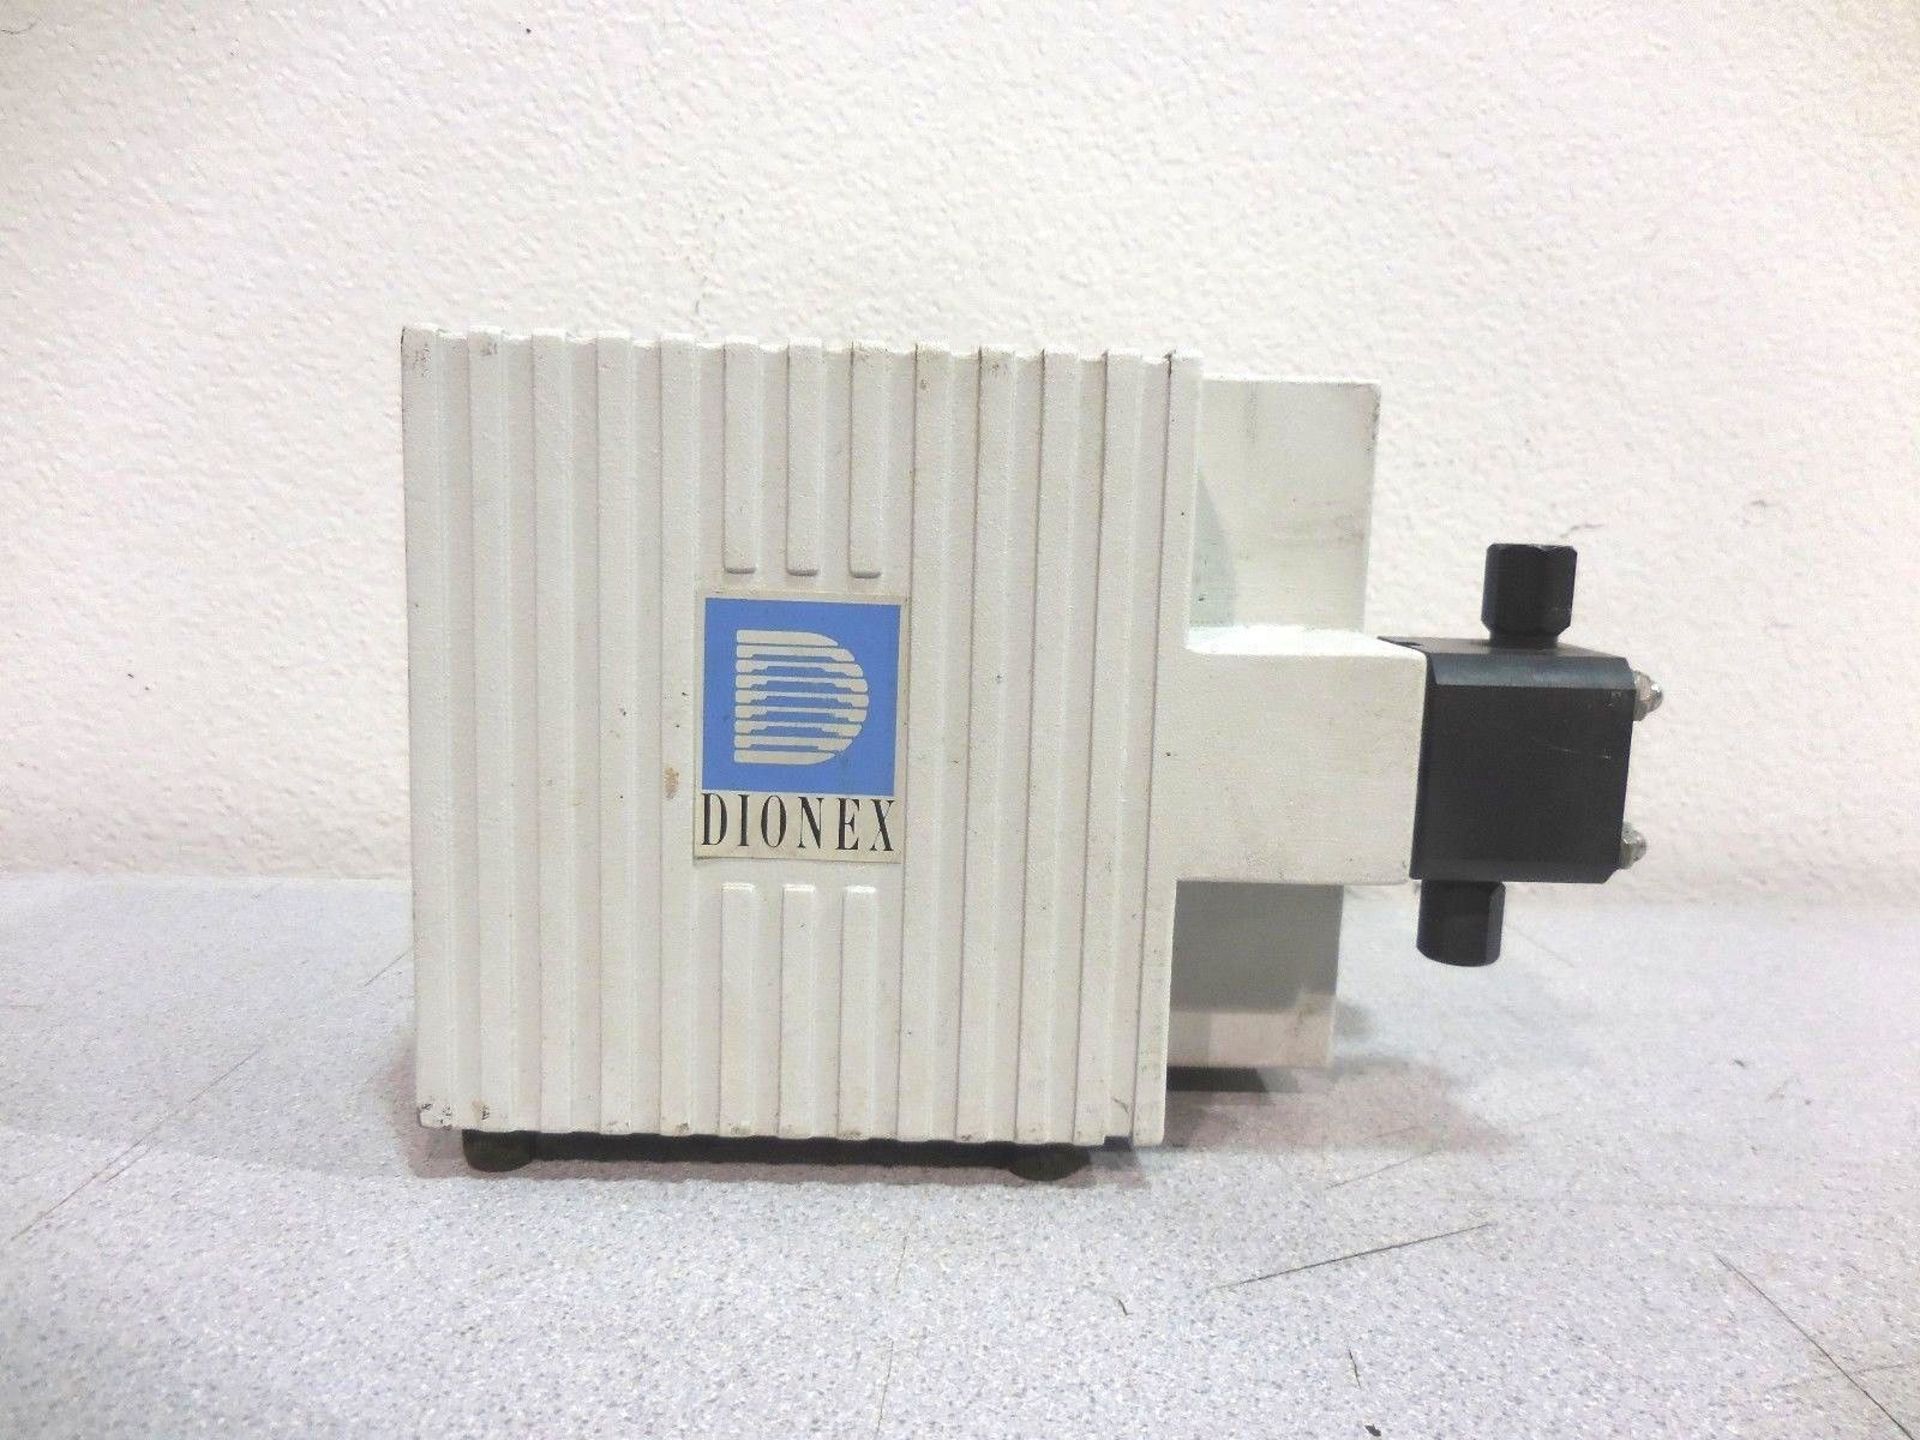 DIONEX DXP ISOCRATIC PUMP - Image 2 of 5